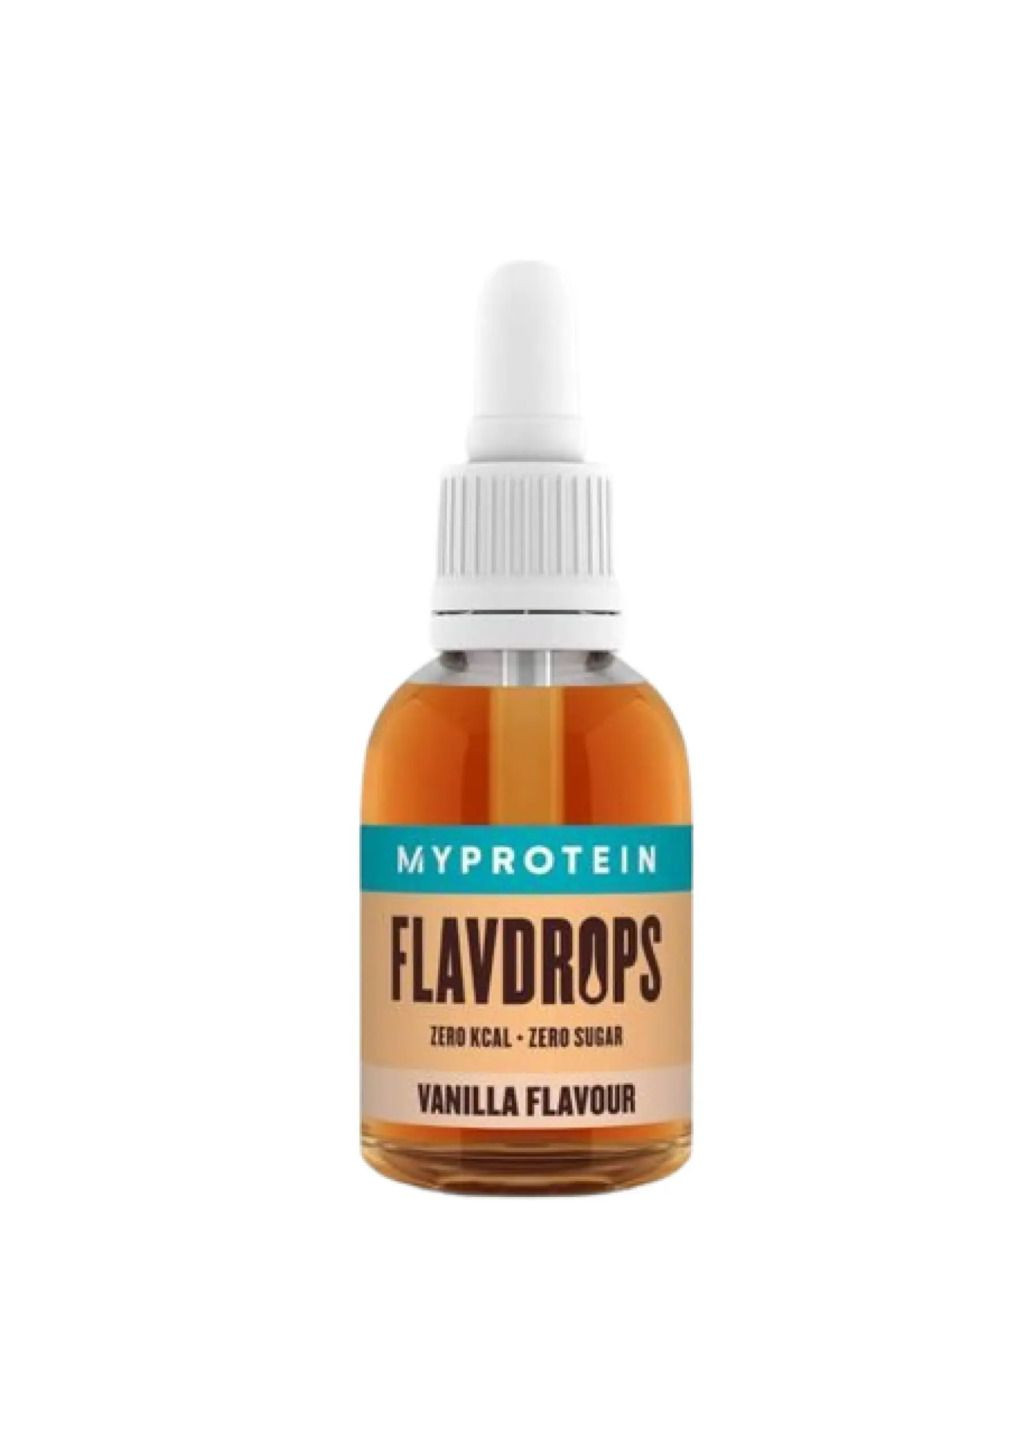 Flavdrops - 50ml Vanilia (ванилия) подсластитель My Protein (283296288)